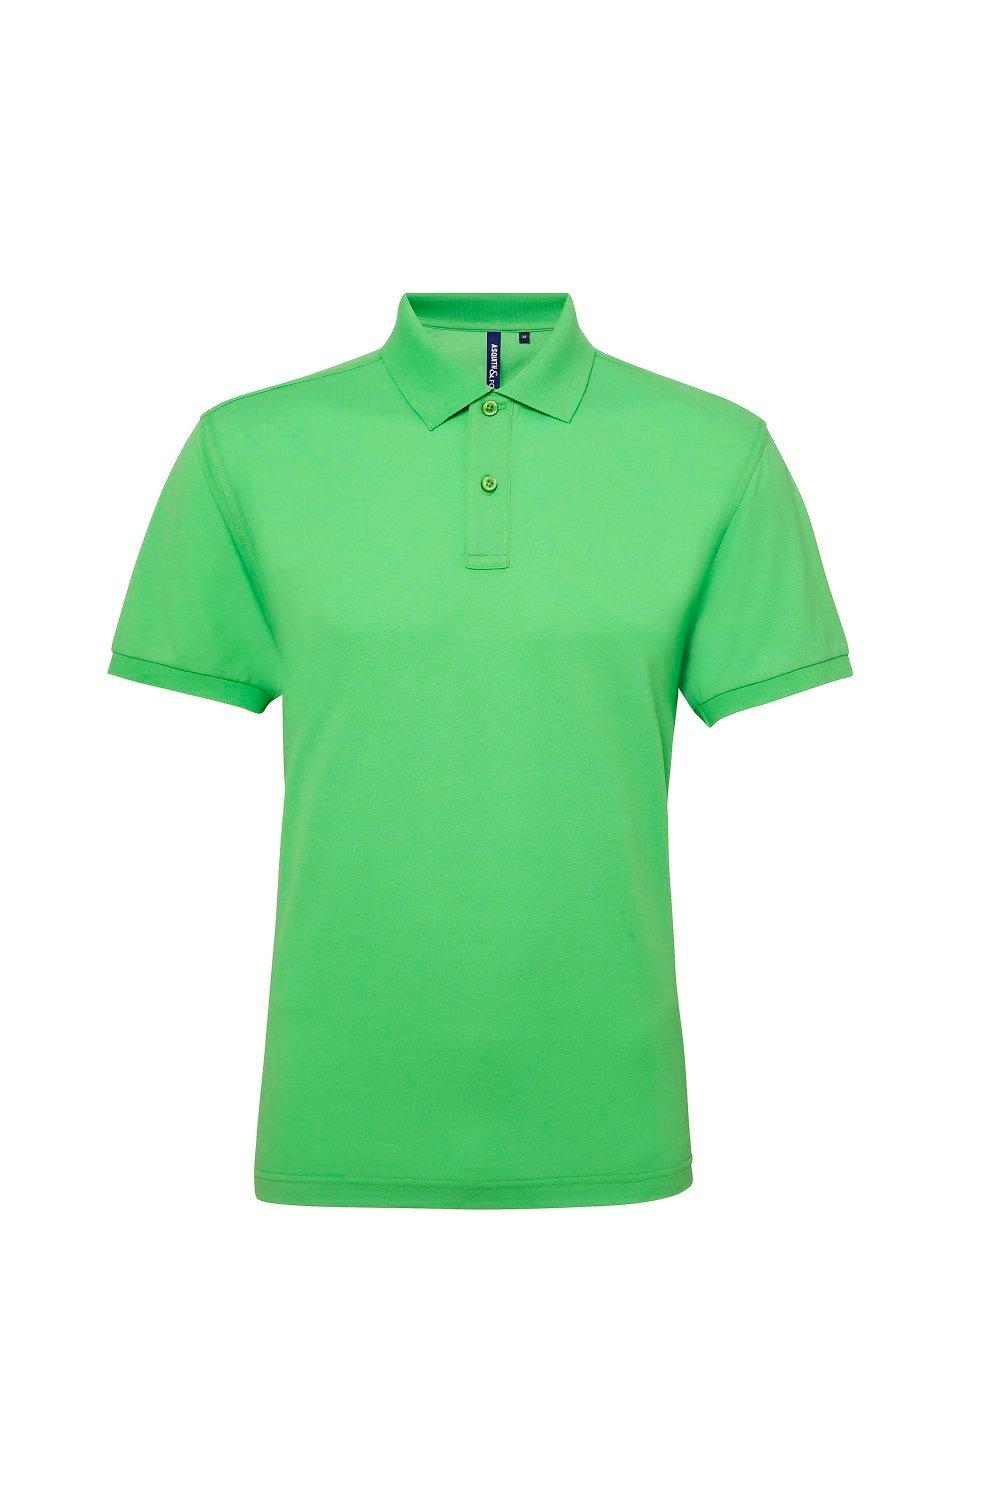 цена Рубашка поло Performance Mix с короткими рукавами Asquith & Fox, зеленый